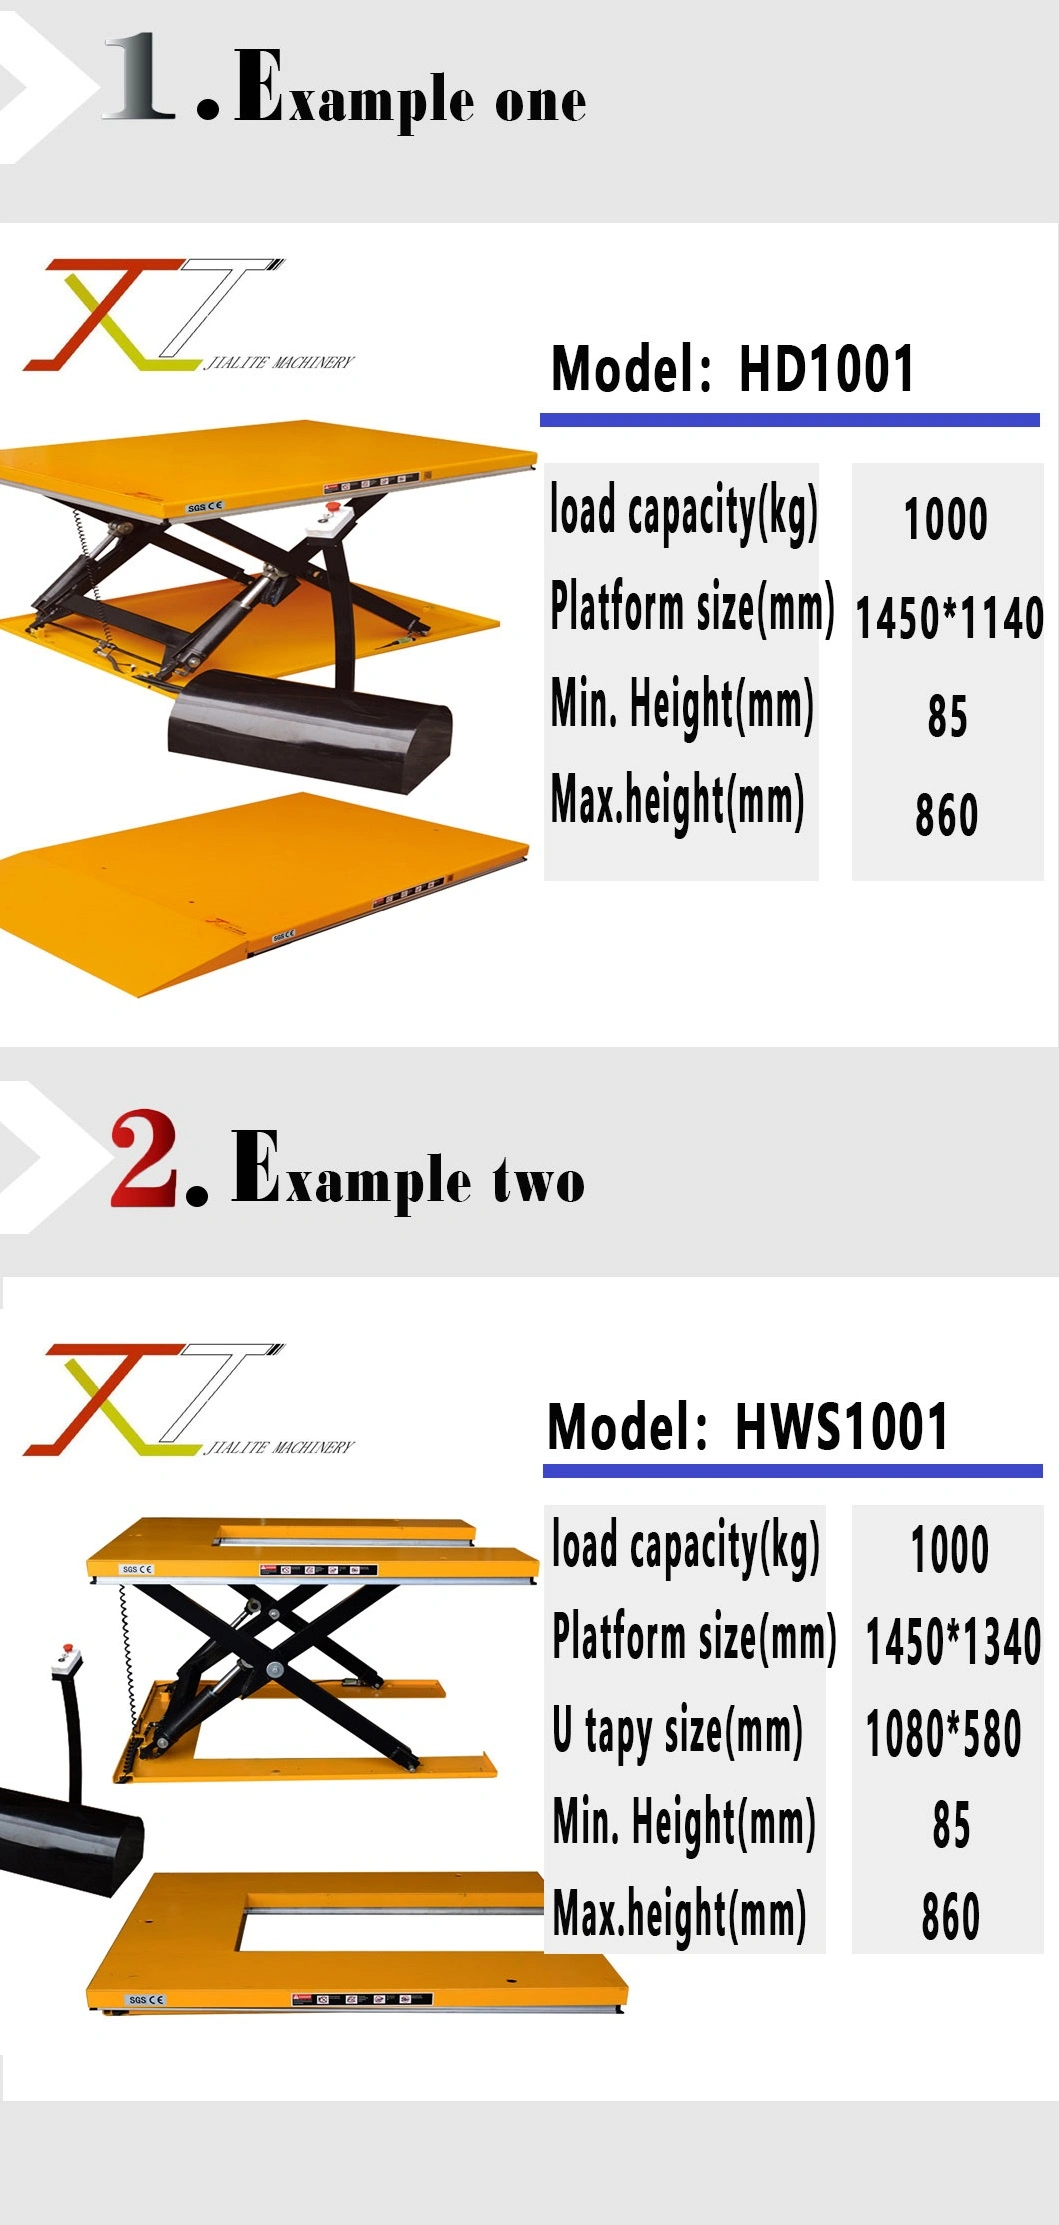 Electric Ultra Level Hydraulic Lifting Platform/Lifting Table